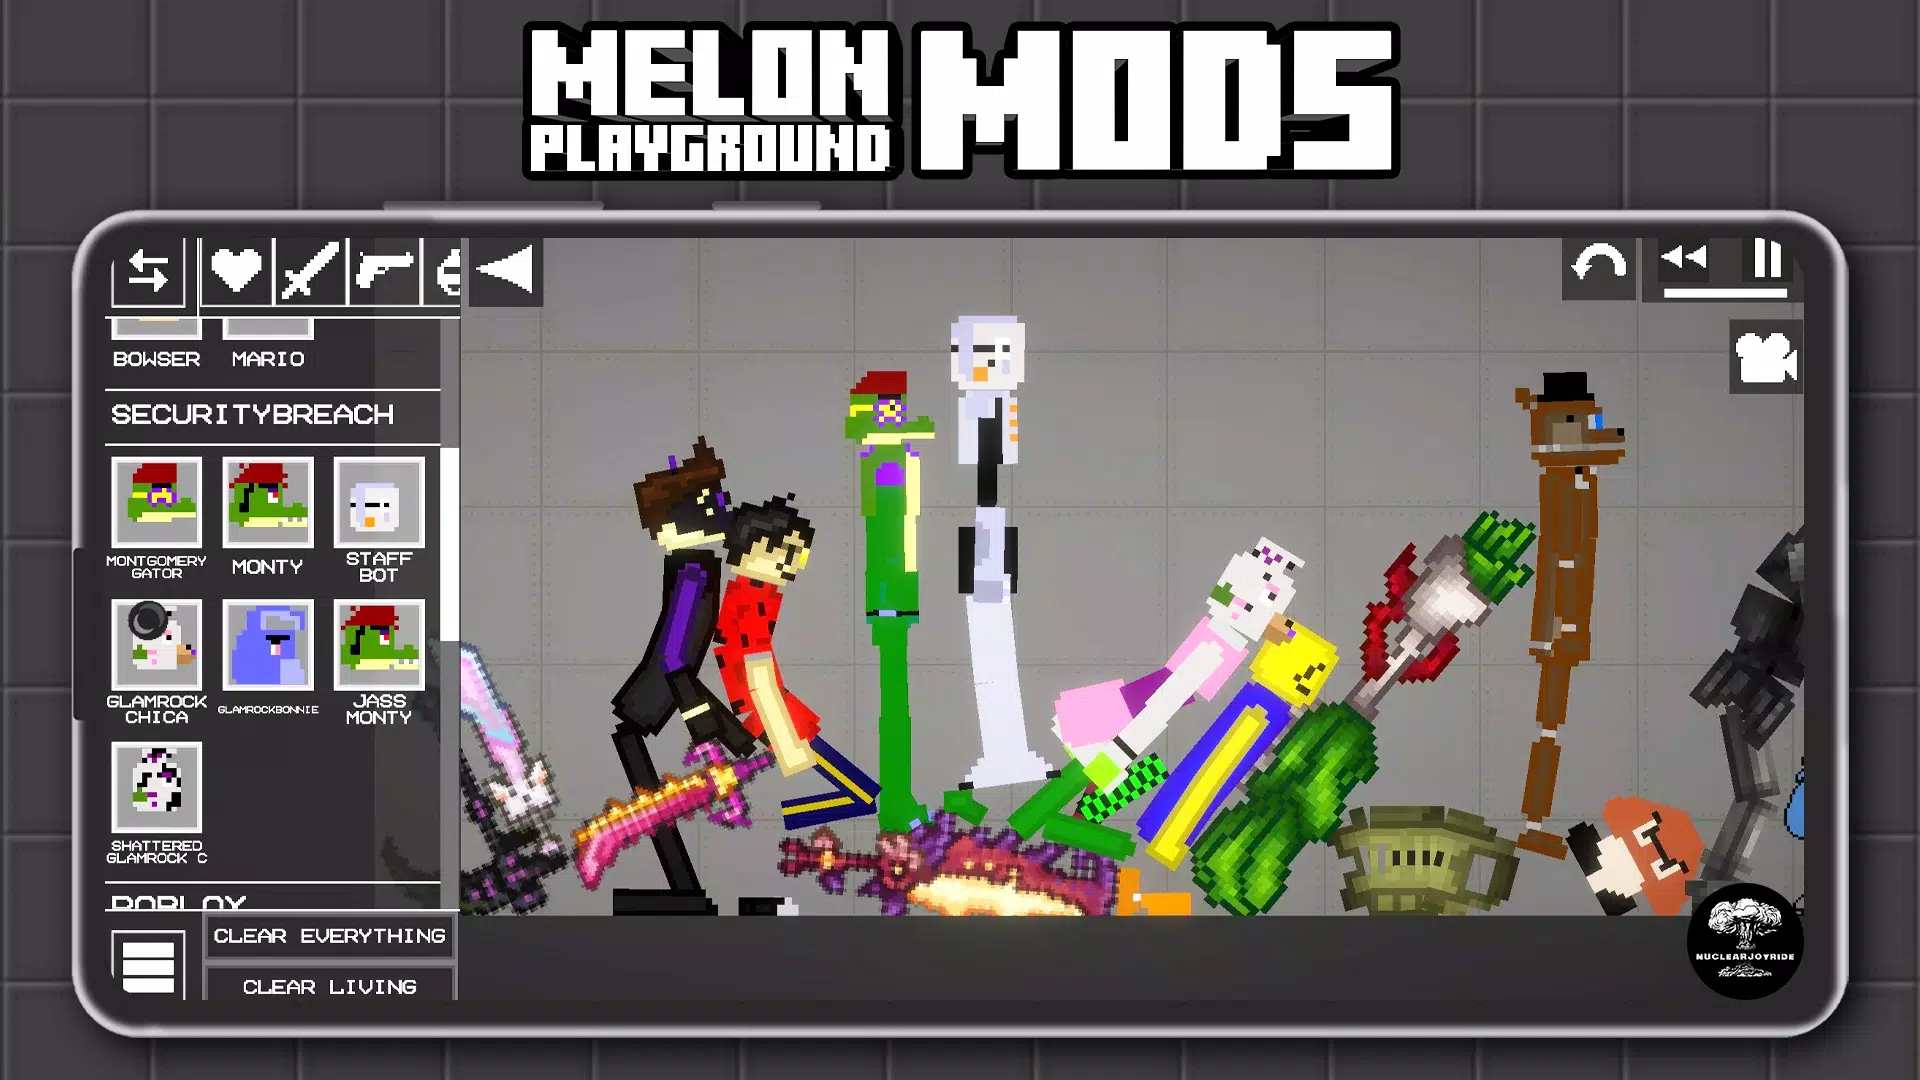 Atomic Heart Natasha Boss Mod - Mods for Melon Playground Sandbox PG